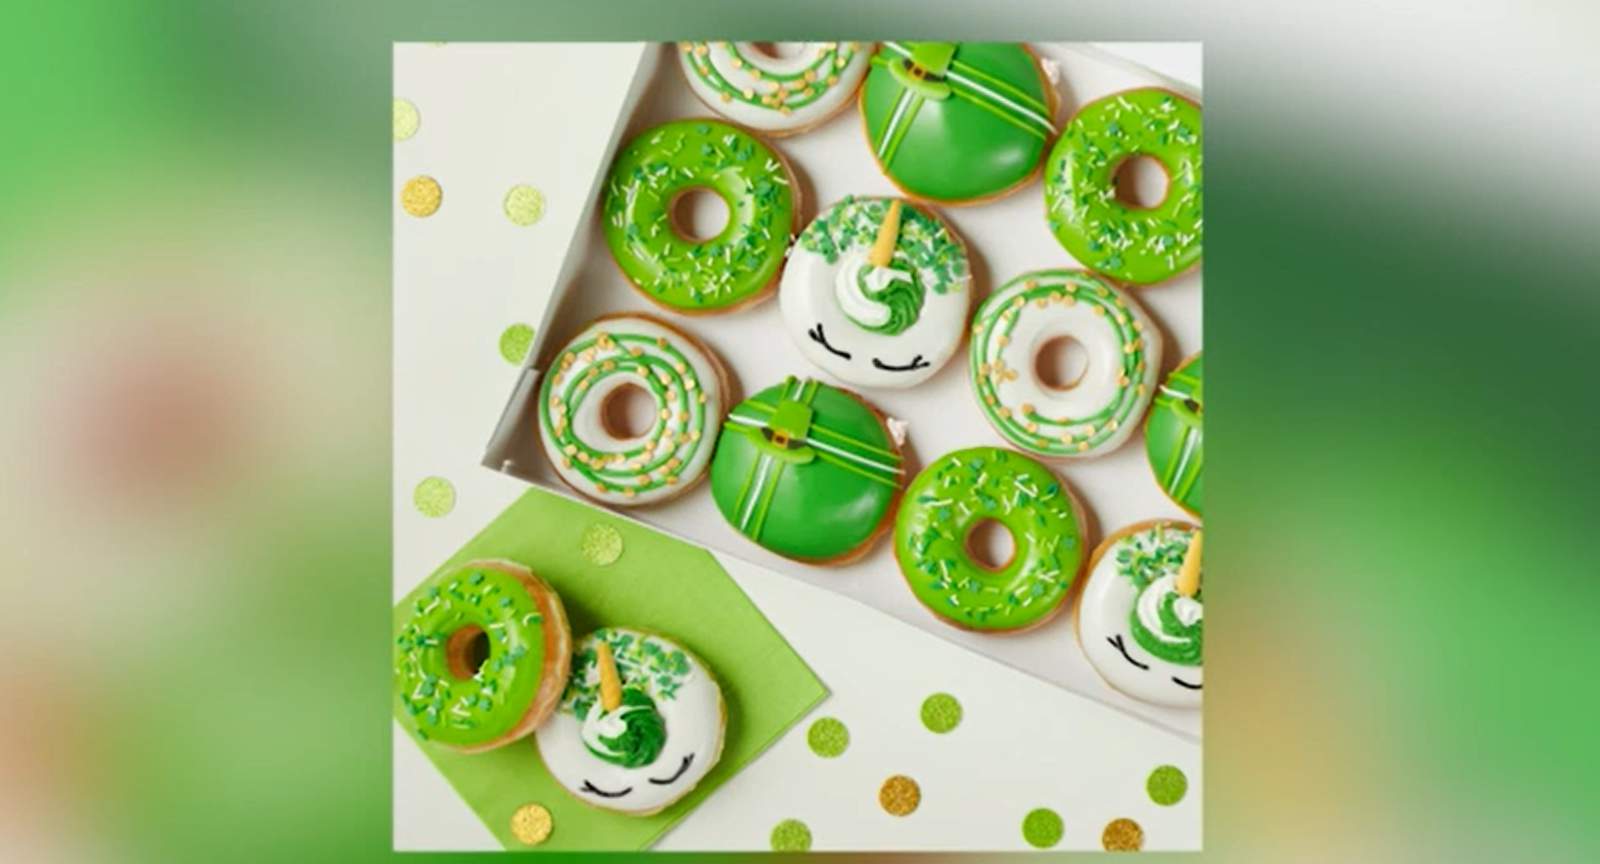 Krispy Kreme offering festive donuts through St. Patrick’s Day